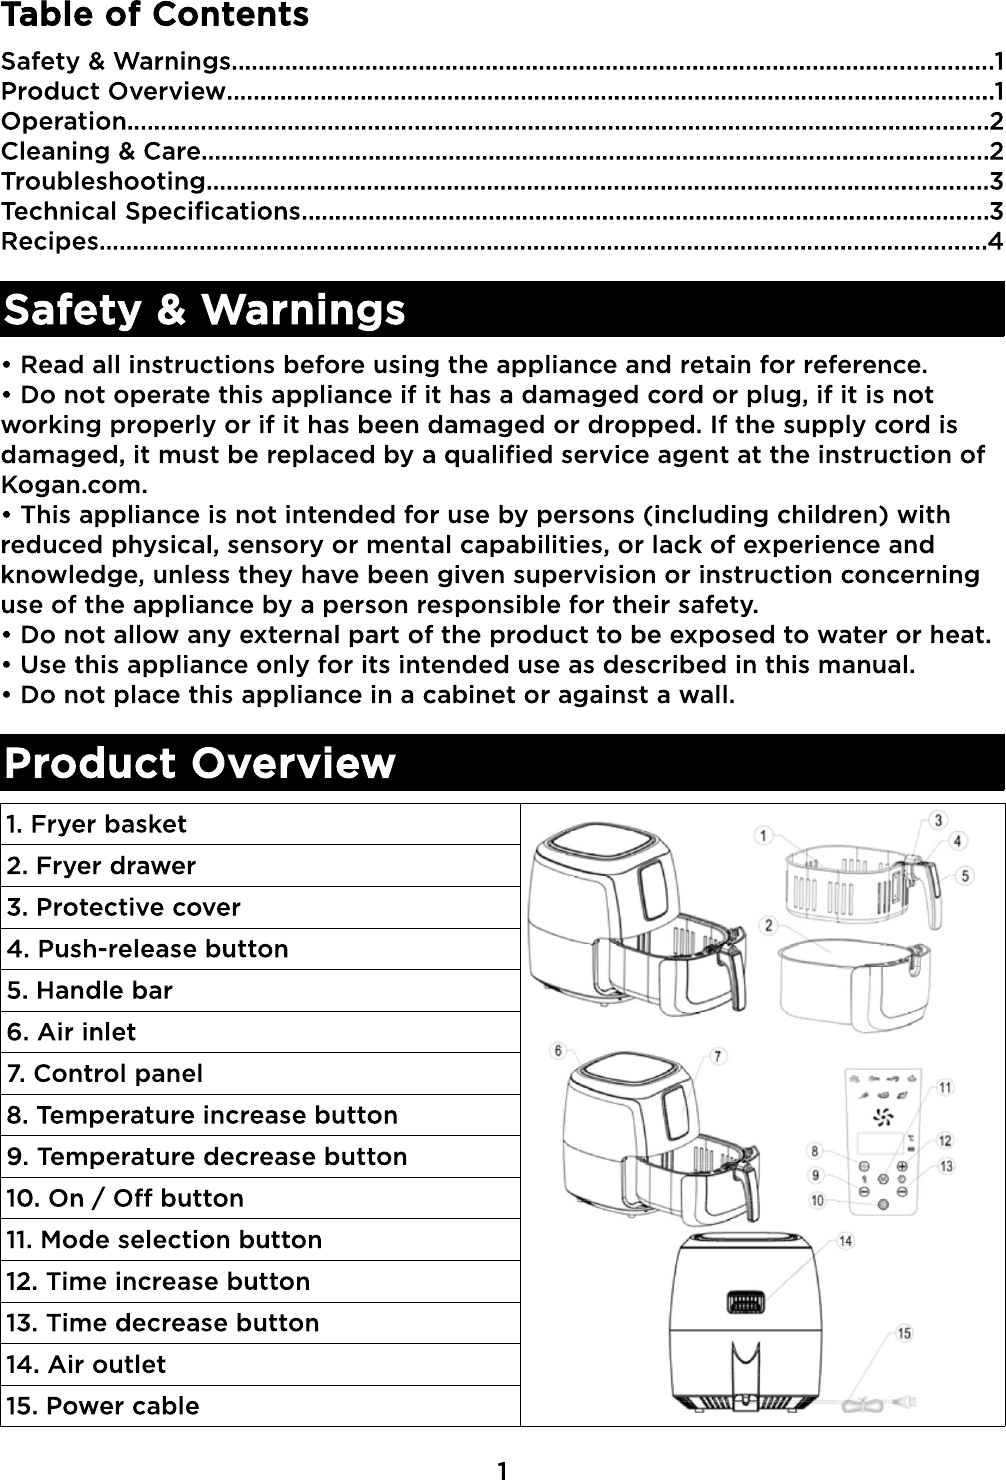 KA5LDGAFRYA 5.2L Digital Low Fat 1800W Air Fryer User Manual A